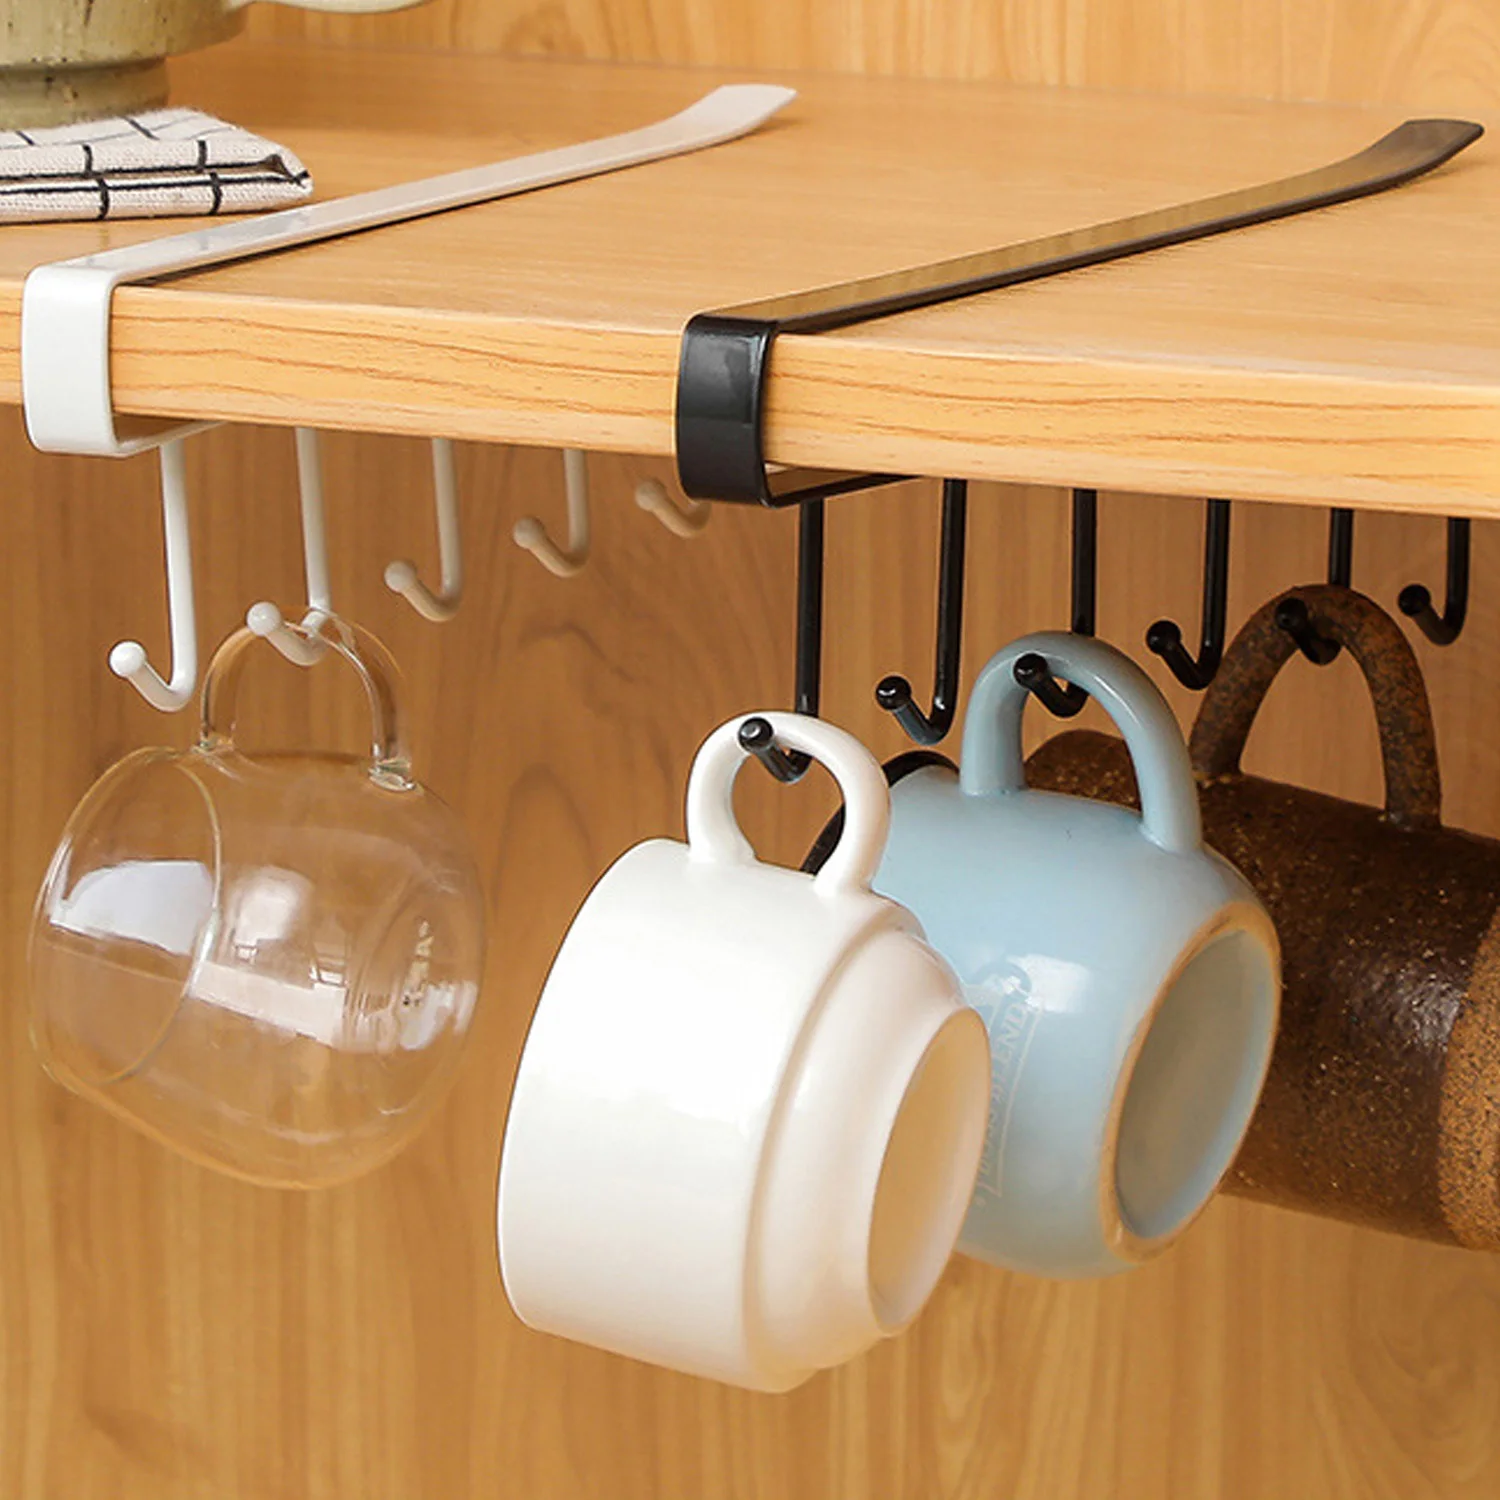 6-Hook Iron Under Shelf Mugs Cups Wine Glasses Spatula Storage Hooks Rack Hanger Organizer for Kitchen Cupboard Wardrobe